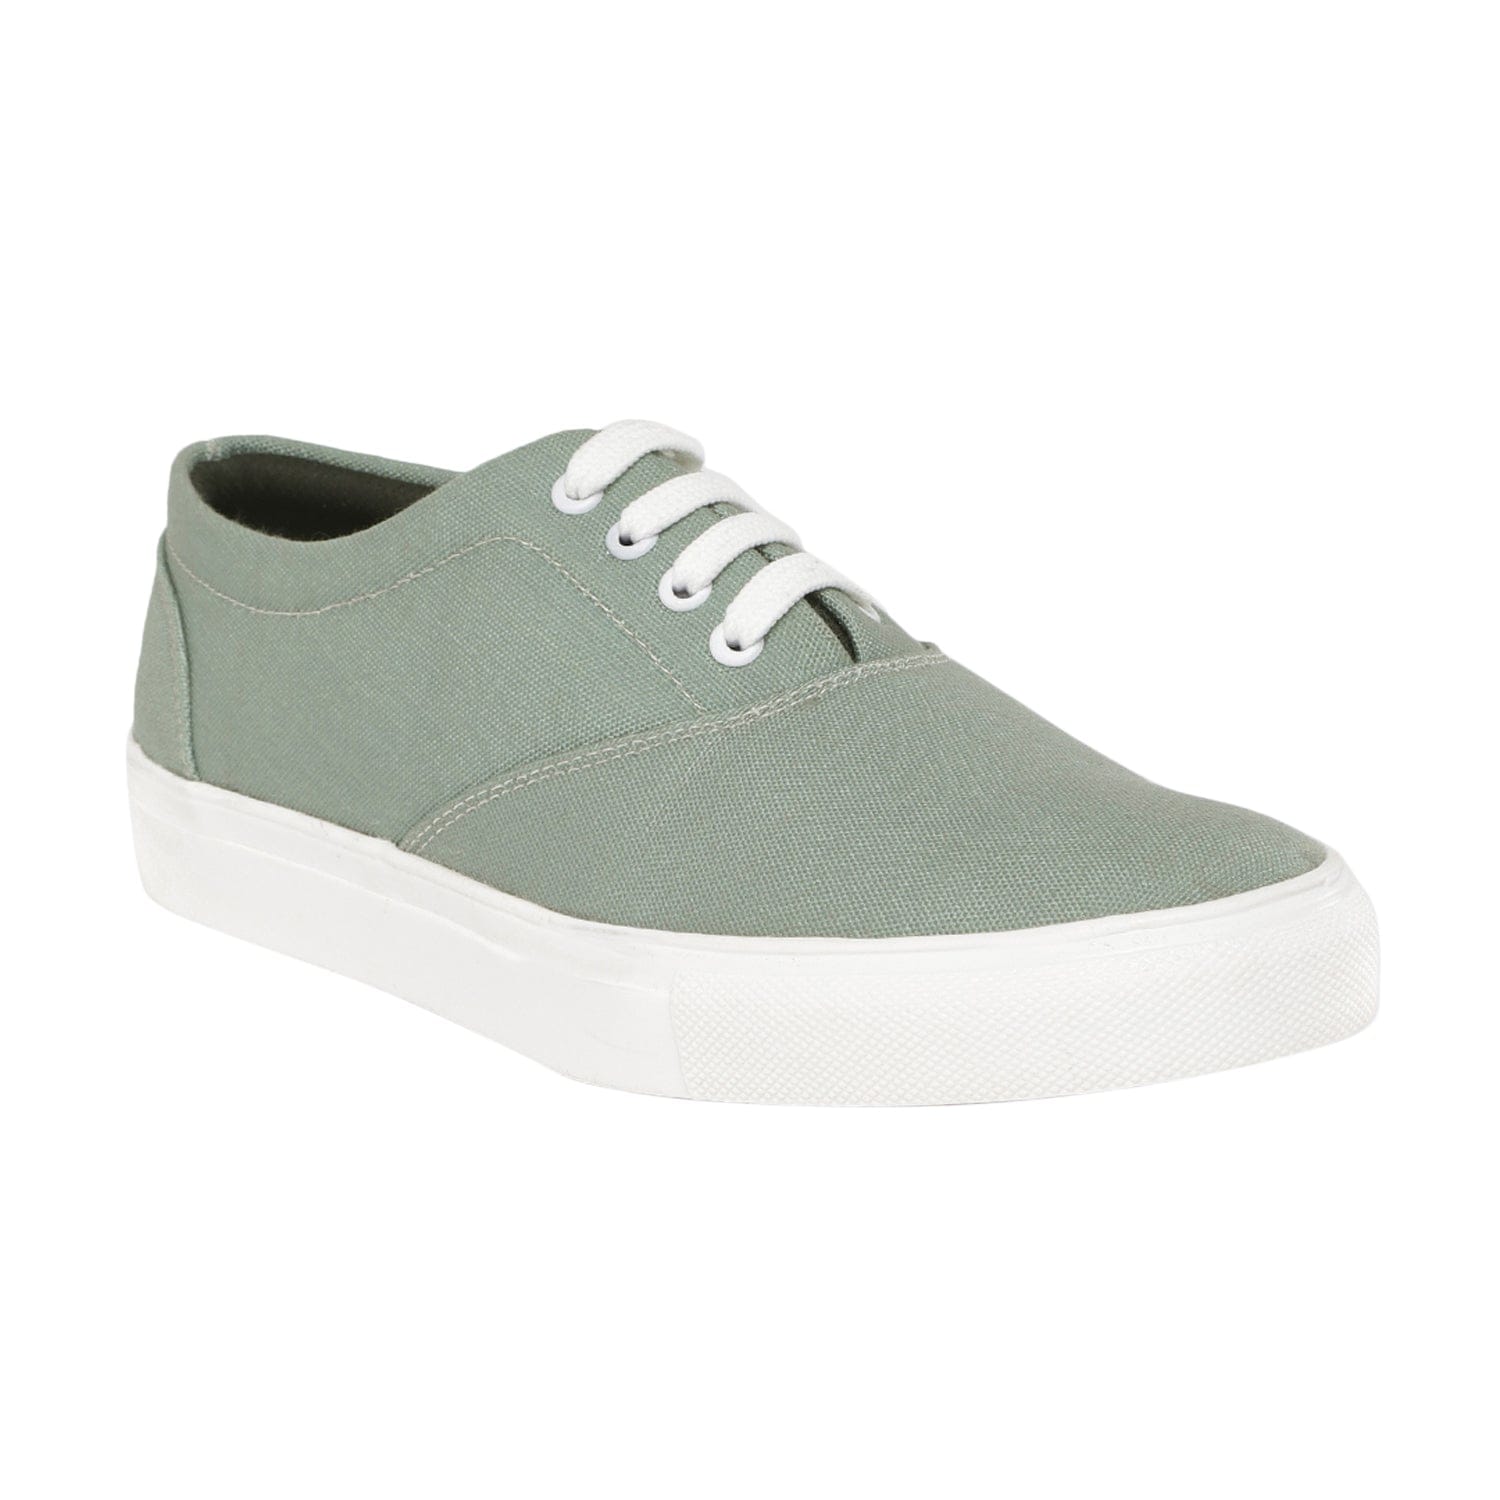 Funkfeets Unisex Olive Green Sneakers